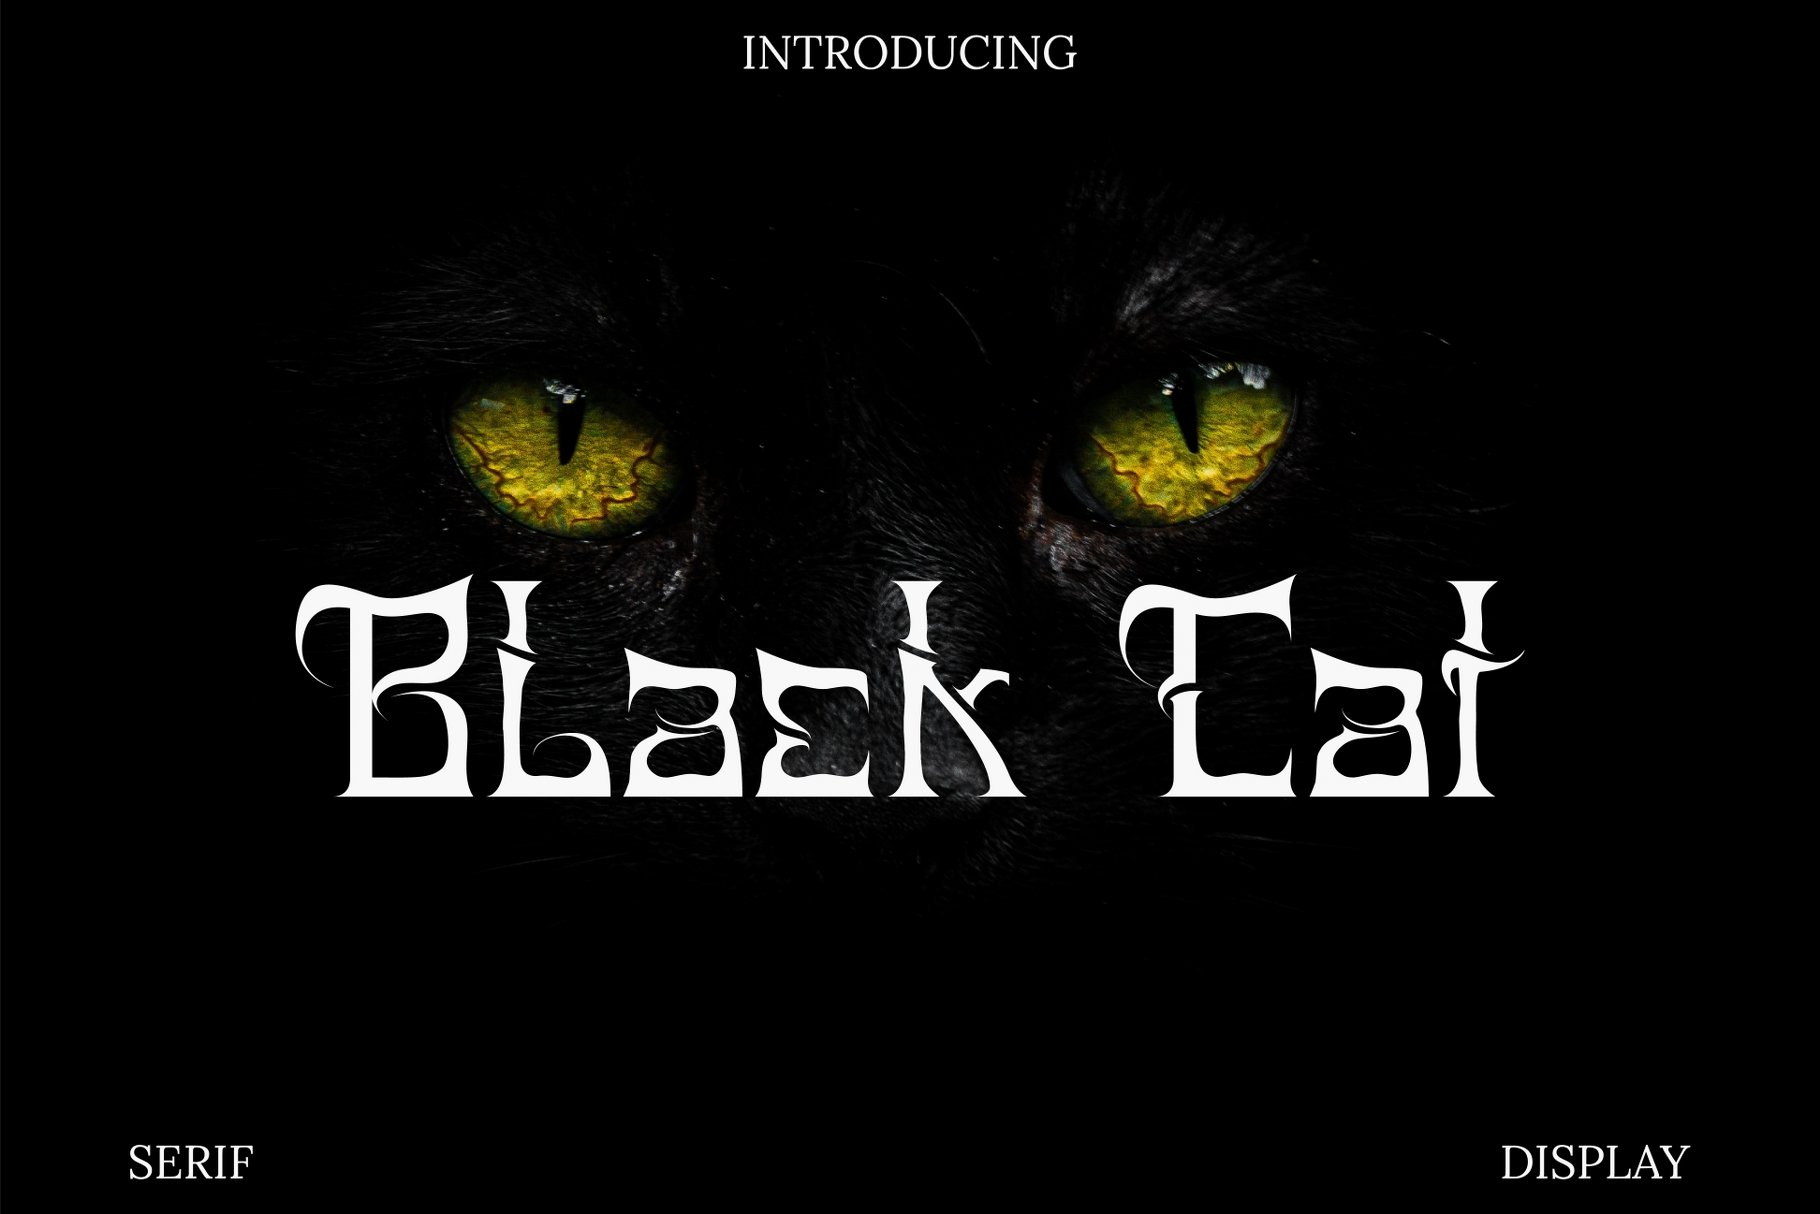 Black Cat-Grindcore Metal Font cover image.